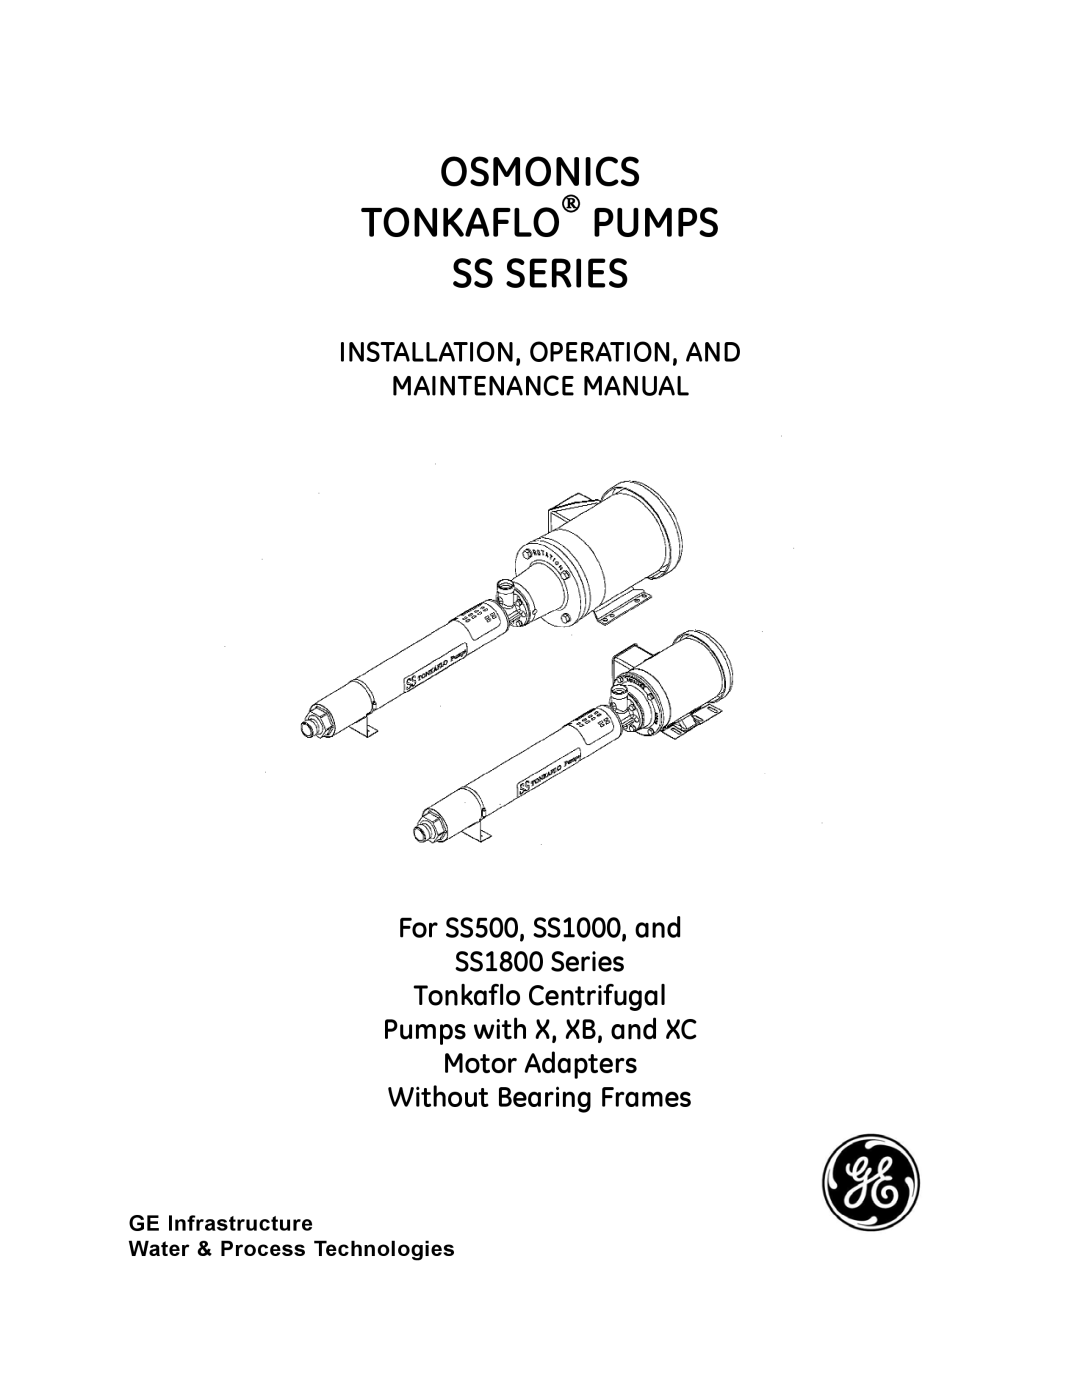 GE SS1800, SS1000, SS500 manual GE Infrastructure Water & Process Technologies, Osmonics Tonkaflo Pumps Ss Series 